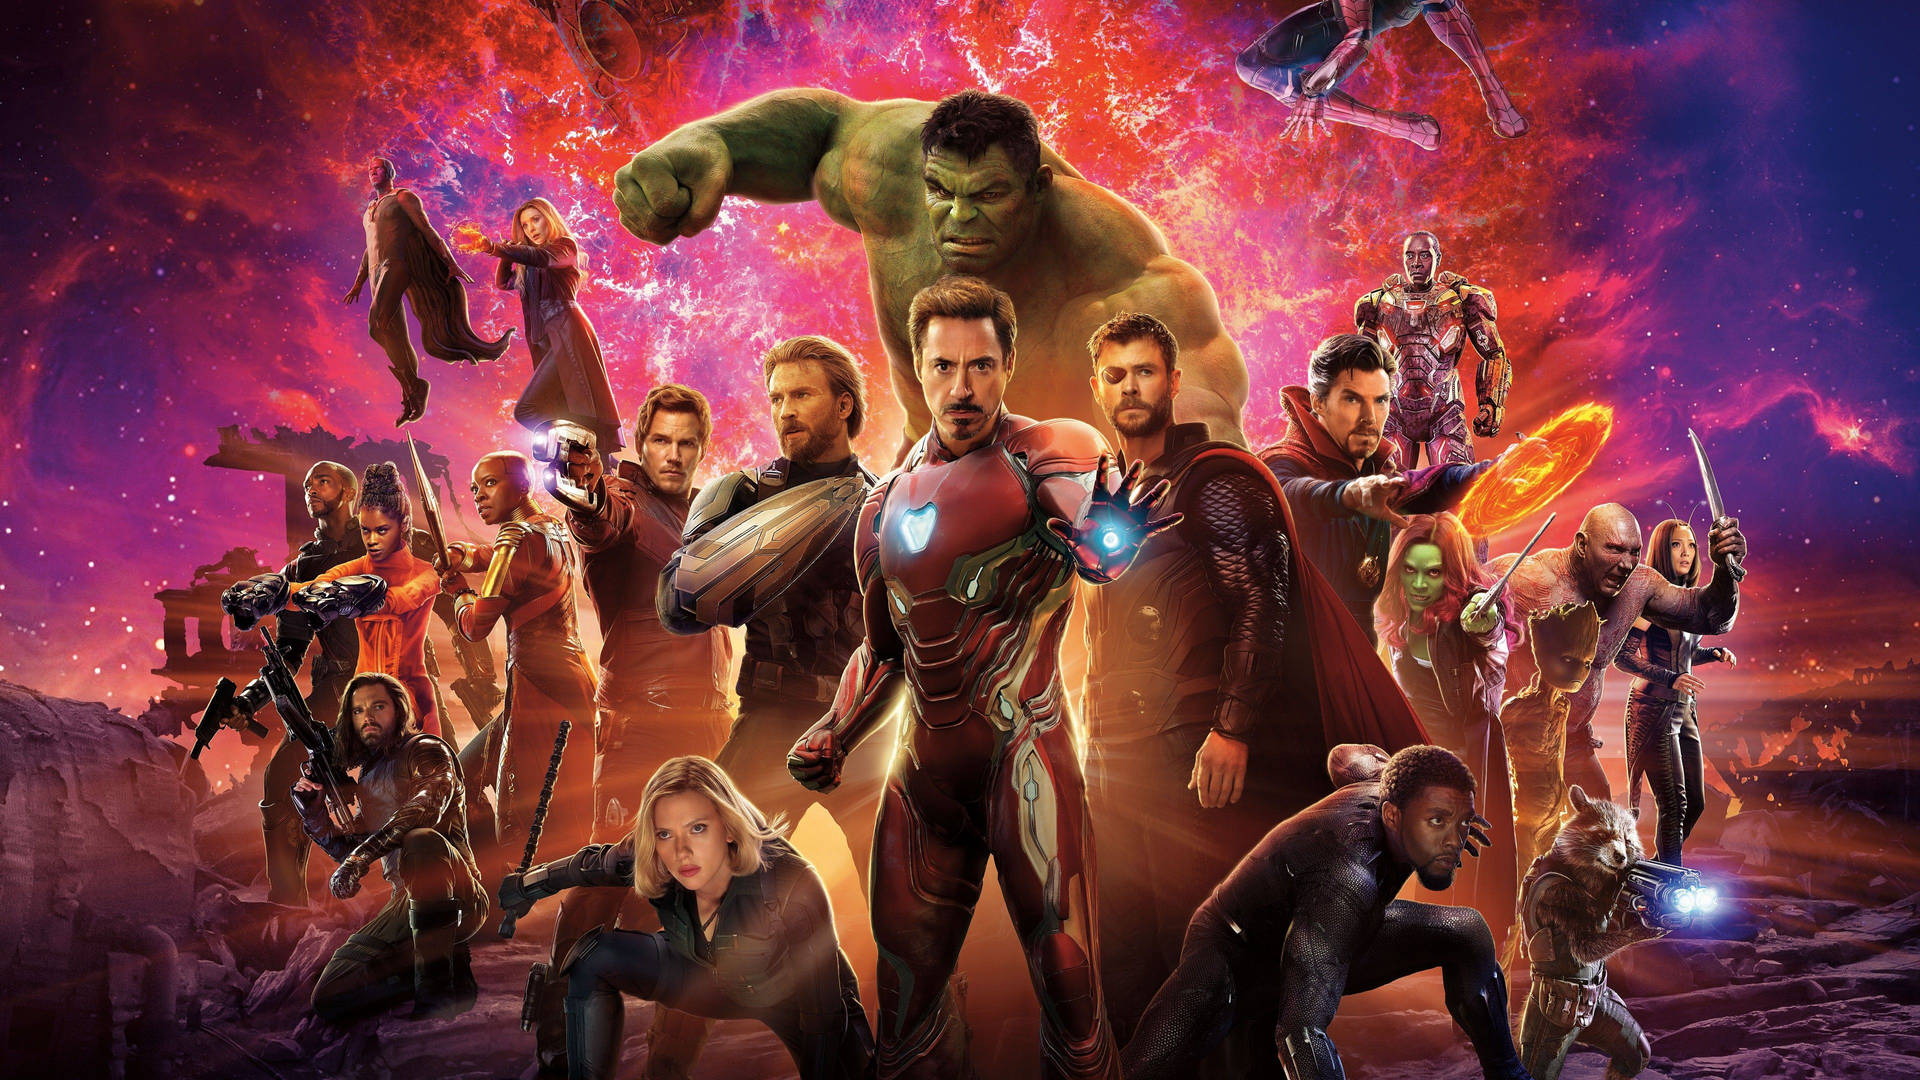 Free Avengers Infinity War Wallpaper Downloads, [100+] Avengers Infinity War  Wallpapers for FREE 